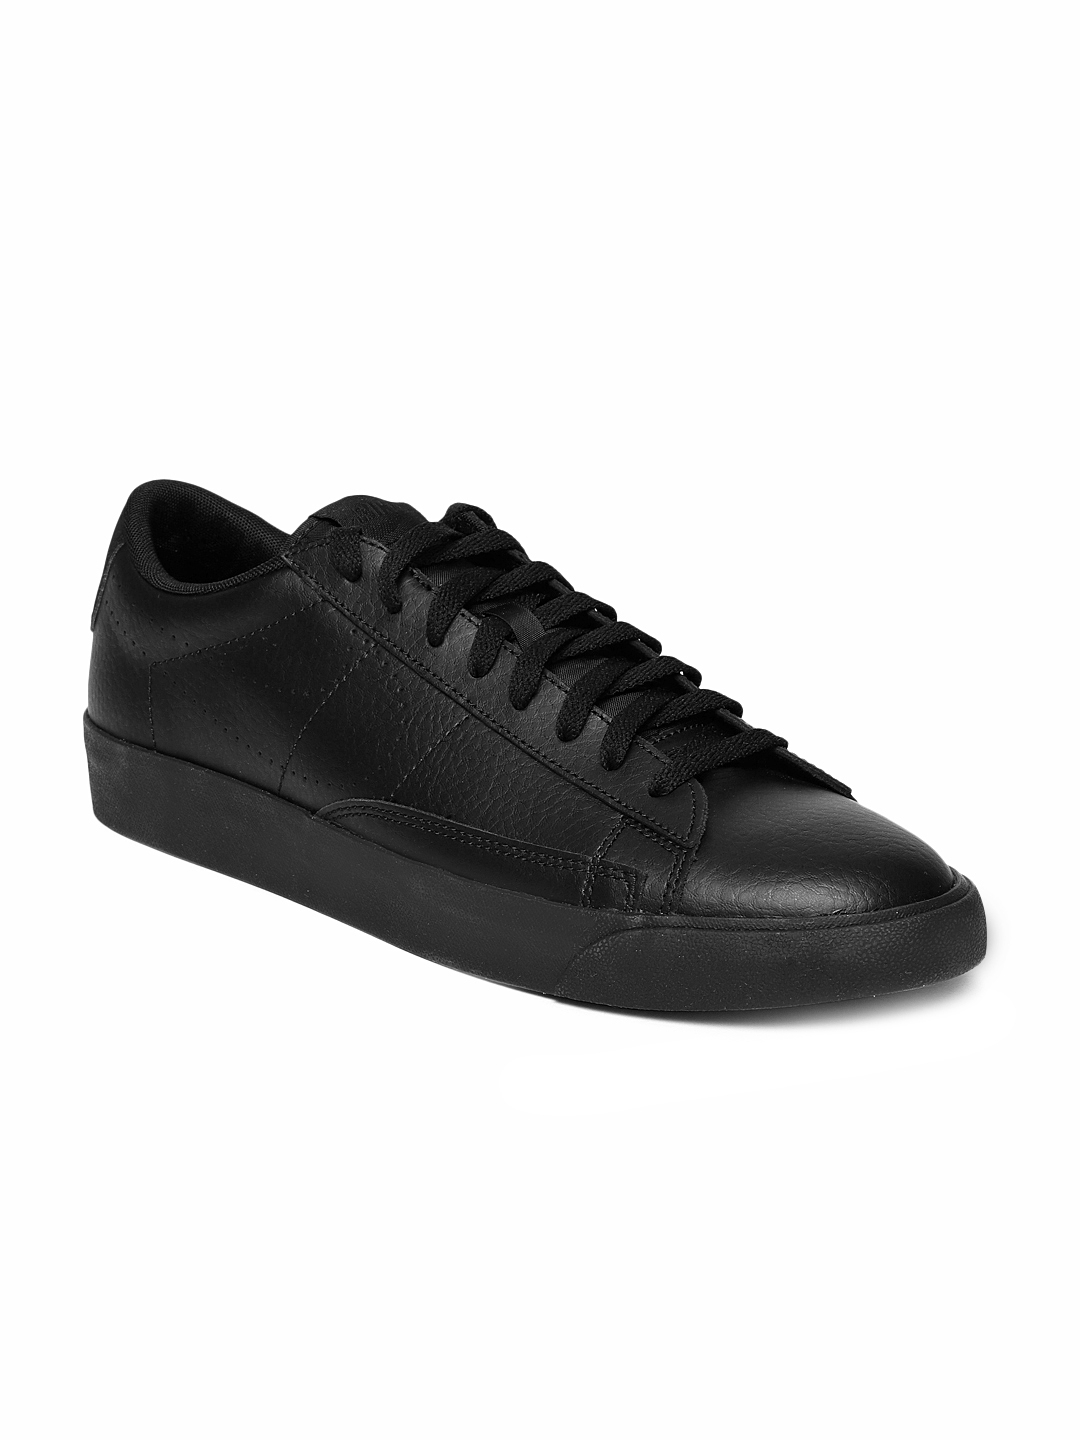 blazer shoes black